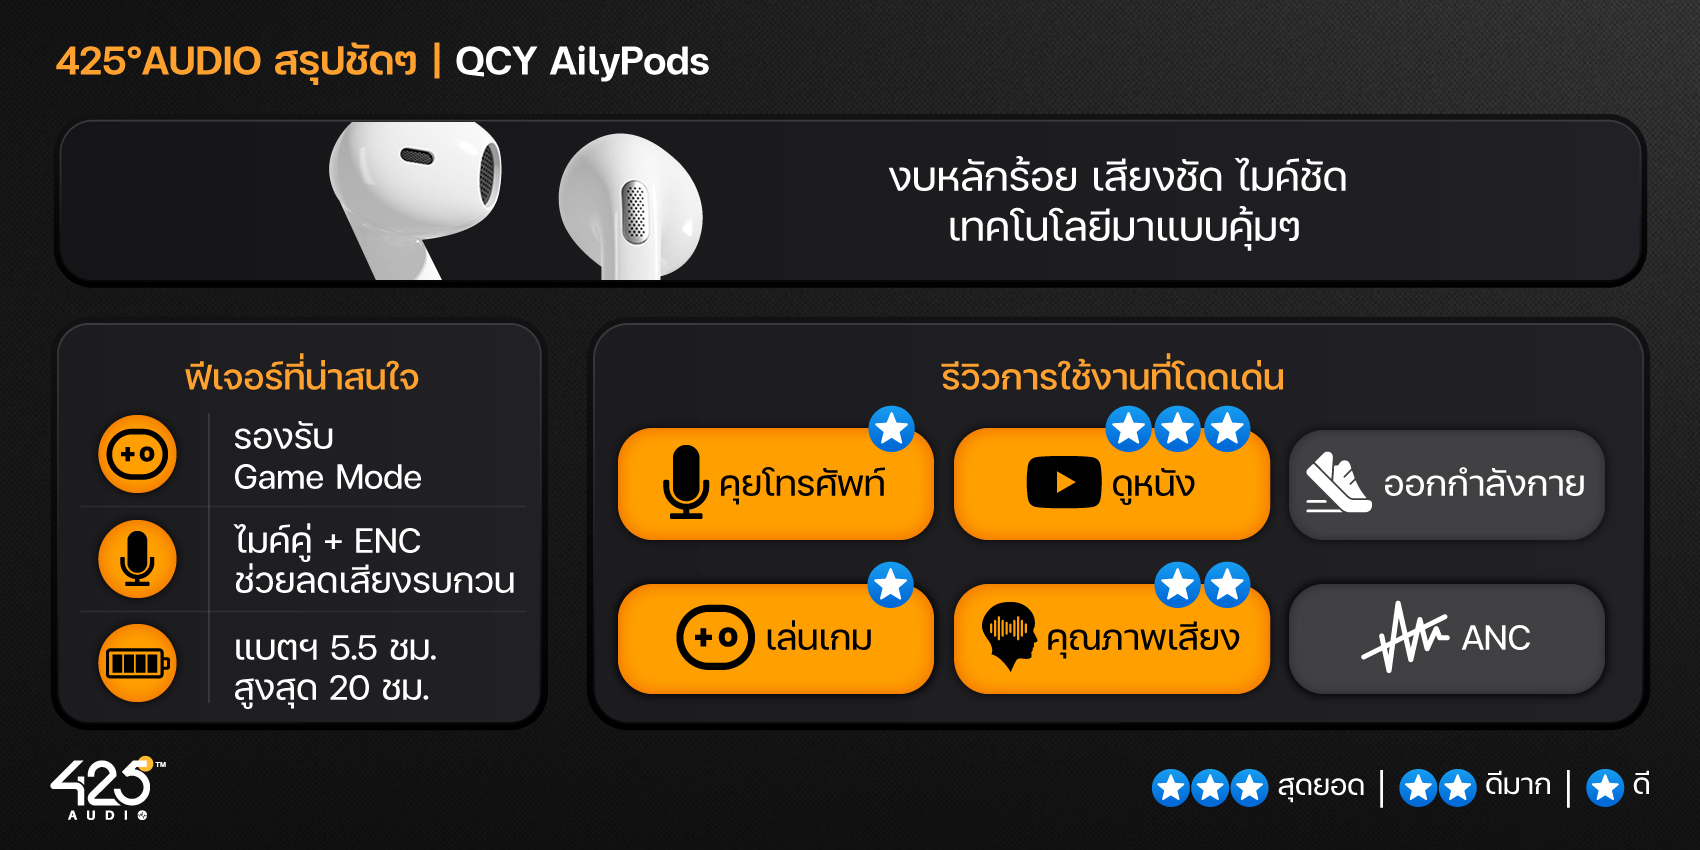 QCY AilyPods,True Wireless,หูฟังไร้สาย,หูฟังบลูทูธ,หูฟังเอียร์บัด,Earbuds,Dual-Mic,หูฟังไมค์ดี